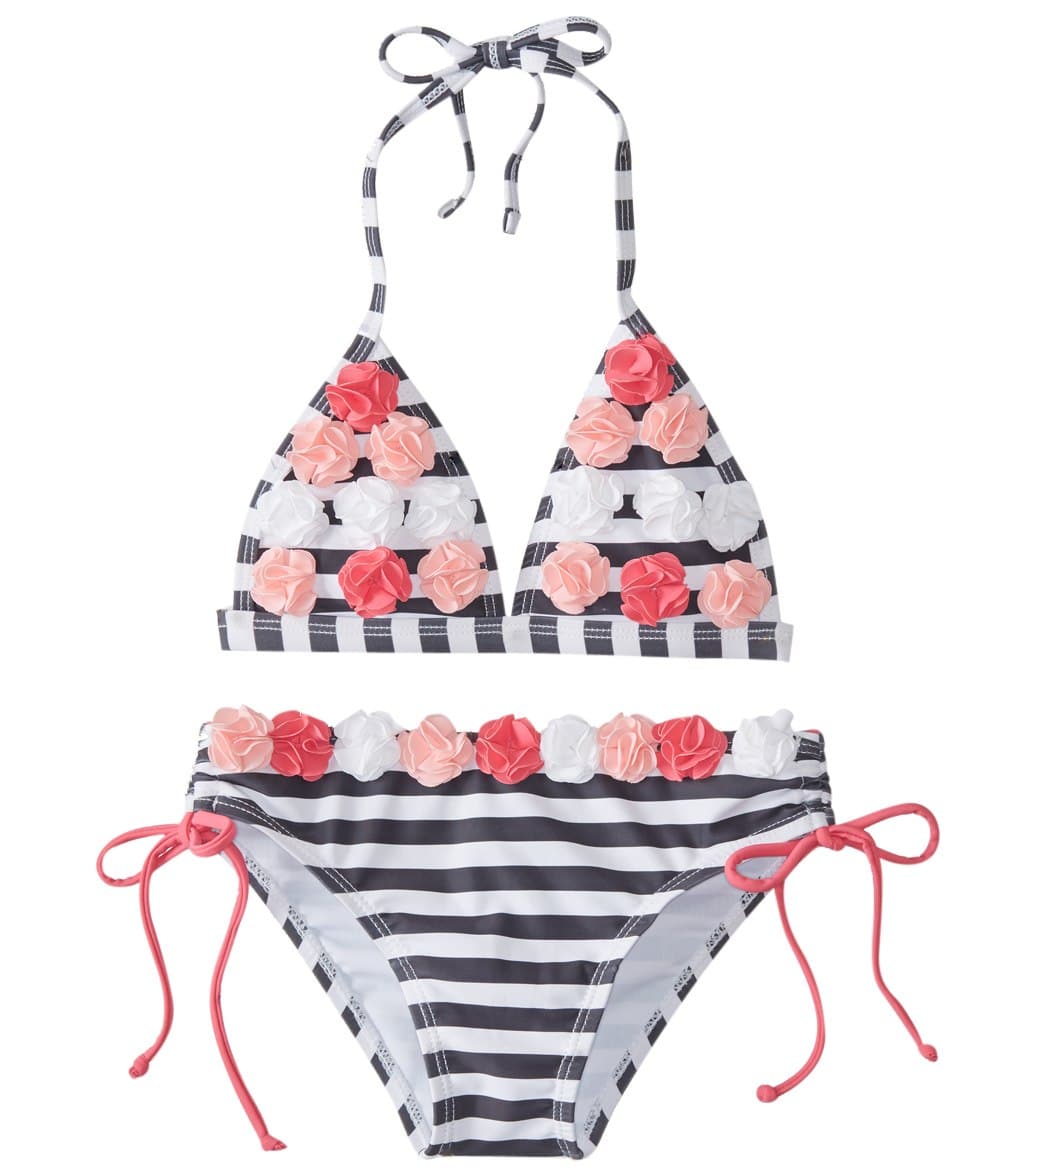 Limeapple Girls' Sand Castles Rosette Bikini Set - Multi Color 2T - Swimoutlet.com